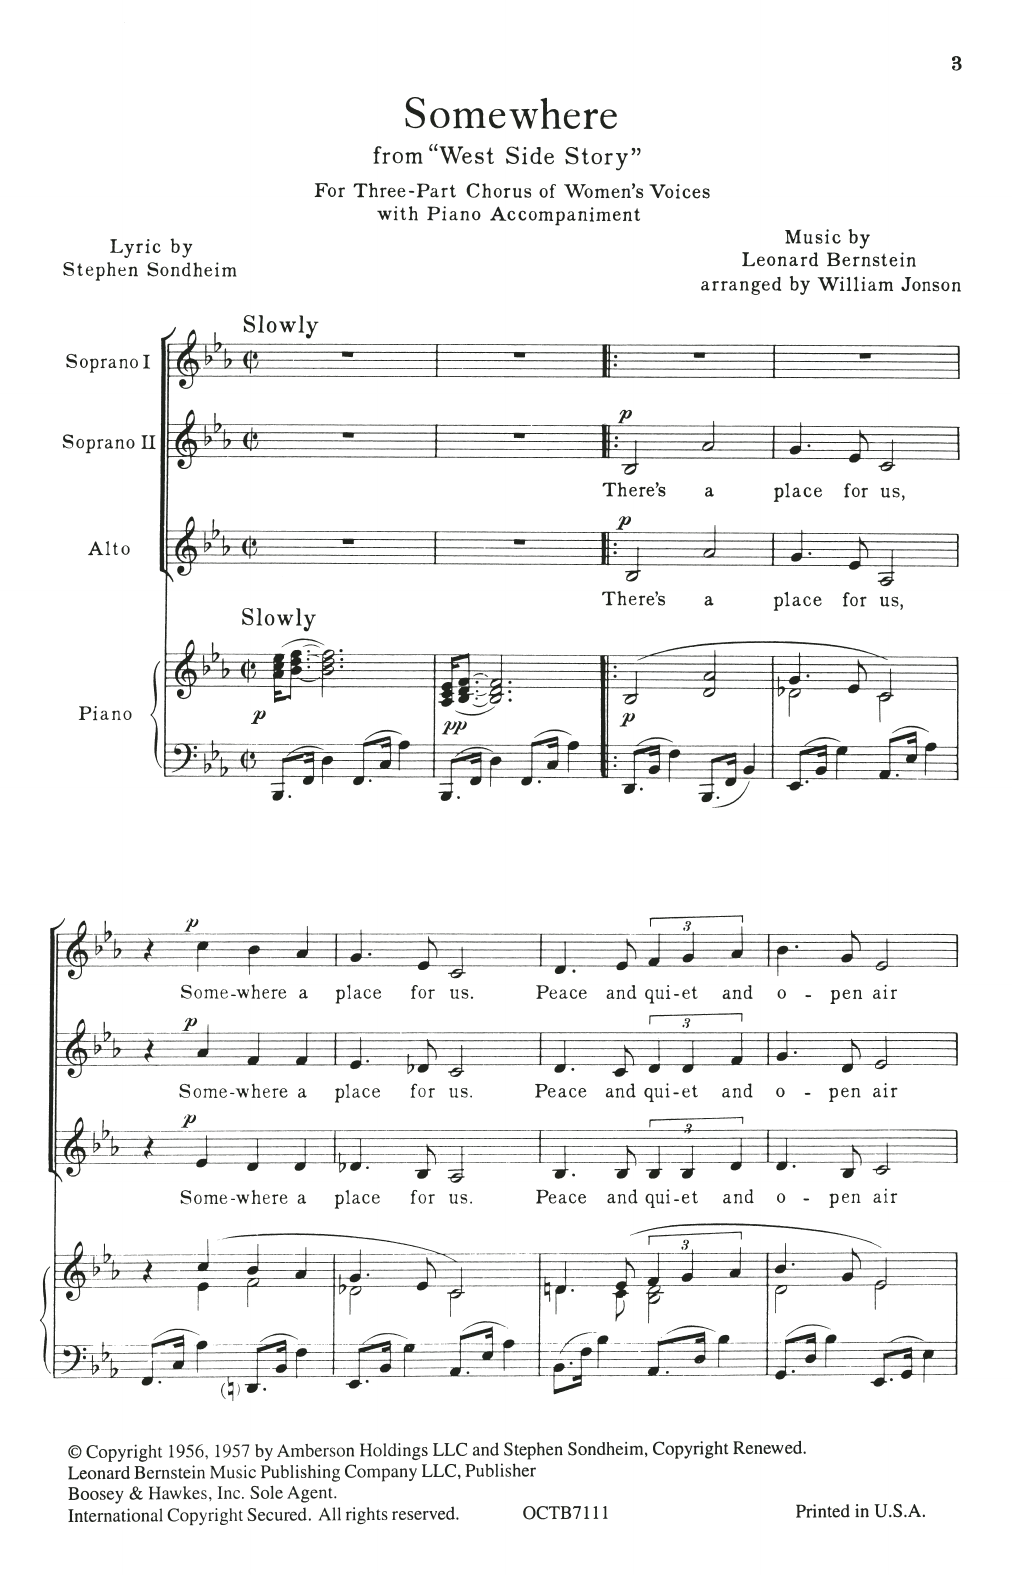 Leonard Bernstein & Stephen Sondheim Somewhere (from West Side Story) (arr. William Jonson) Sheet Music Notes & Chords for SSA Choir - Download or Print PDF